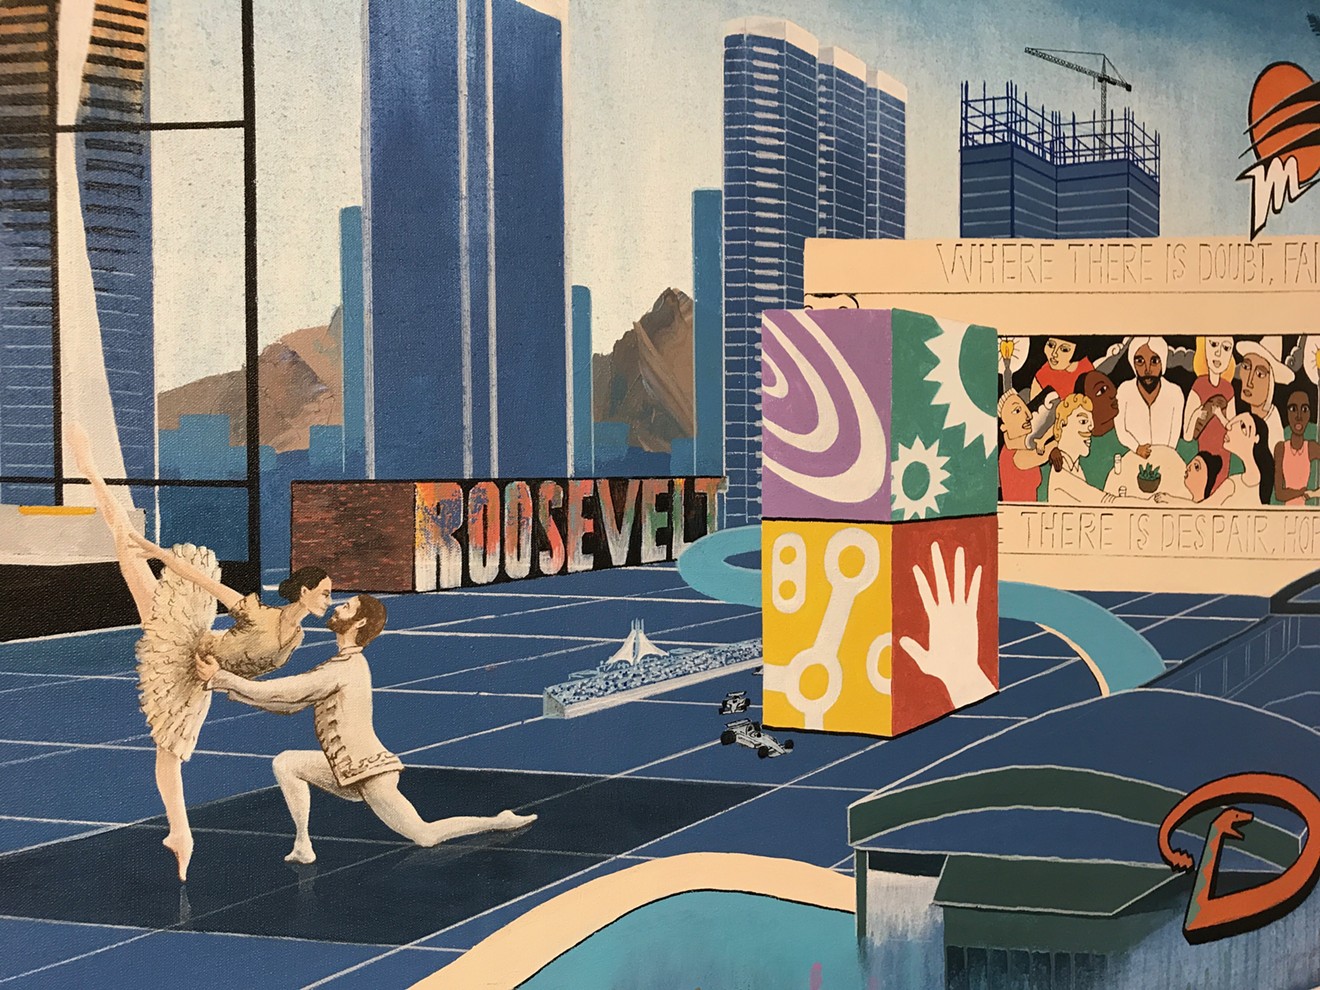 Detail of Michael Pruitt mural on view at Arizona Heritage Center.